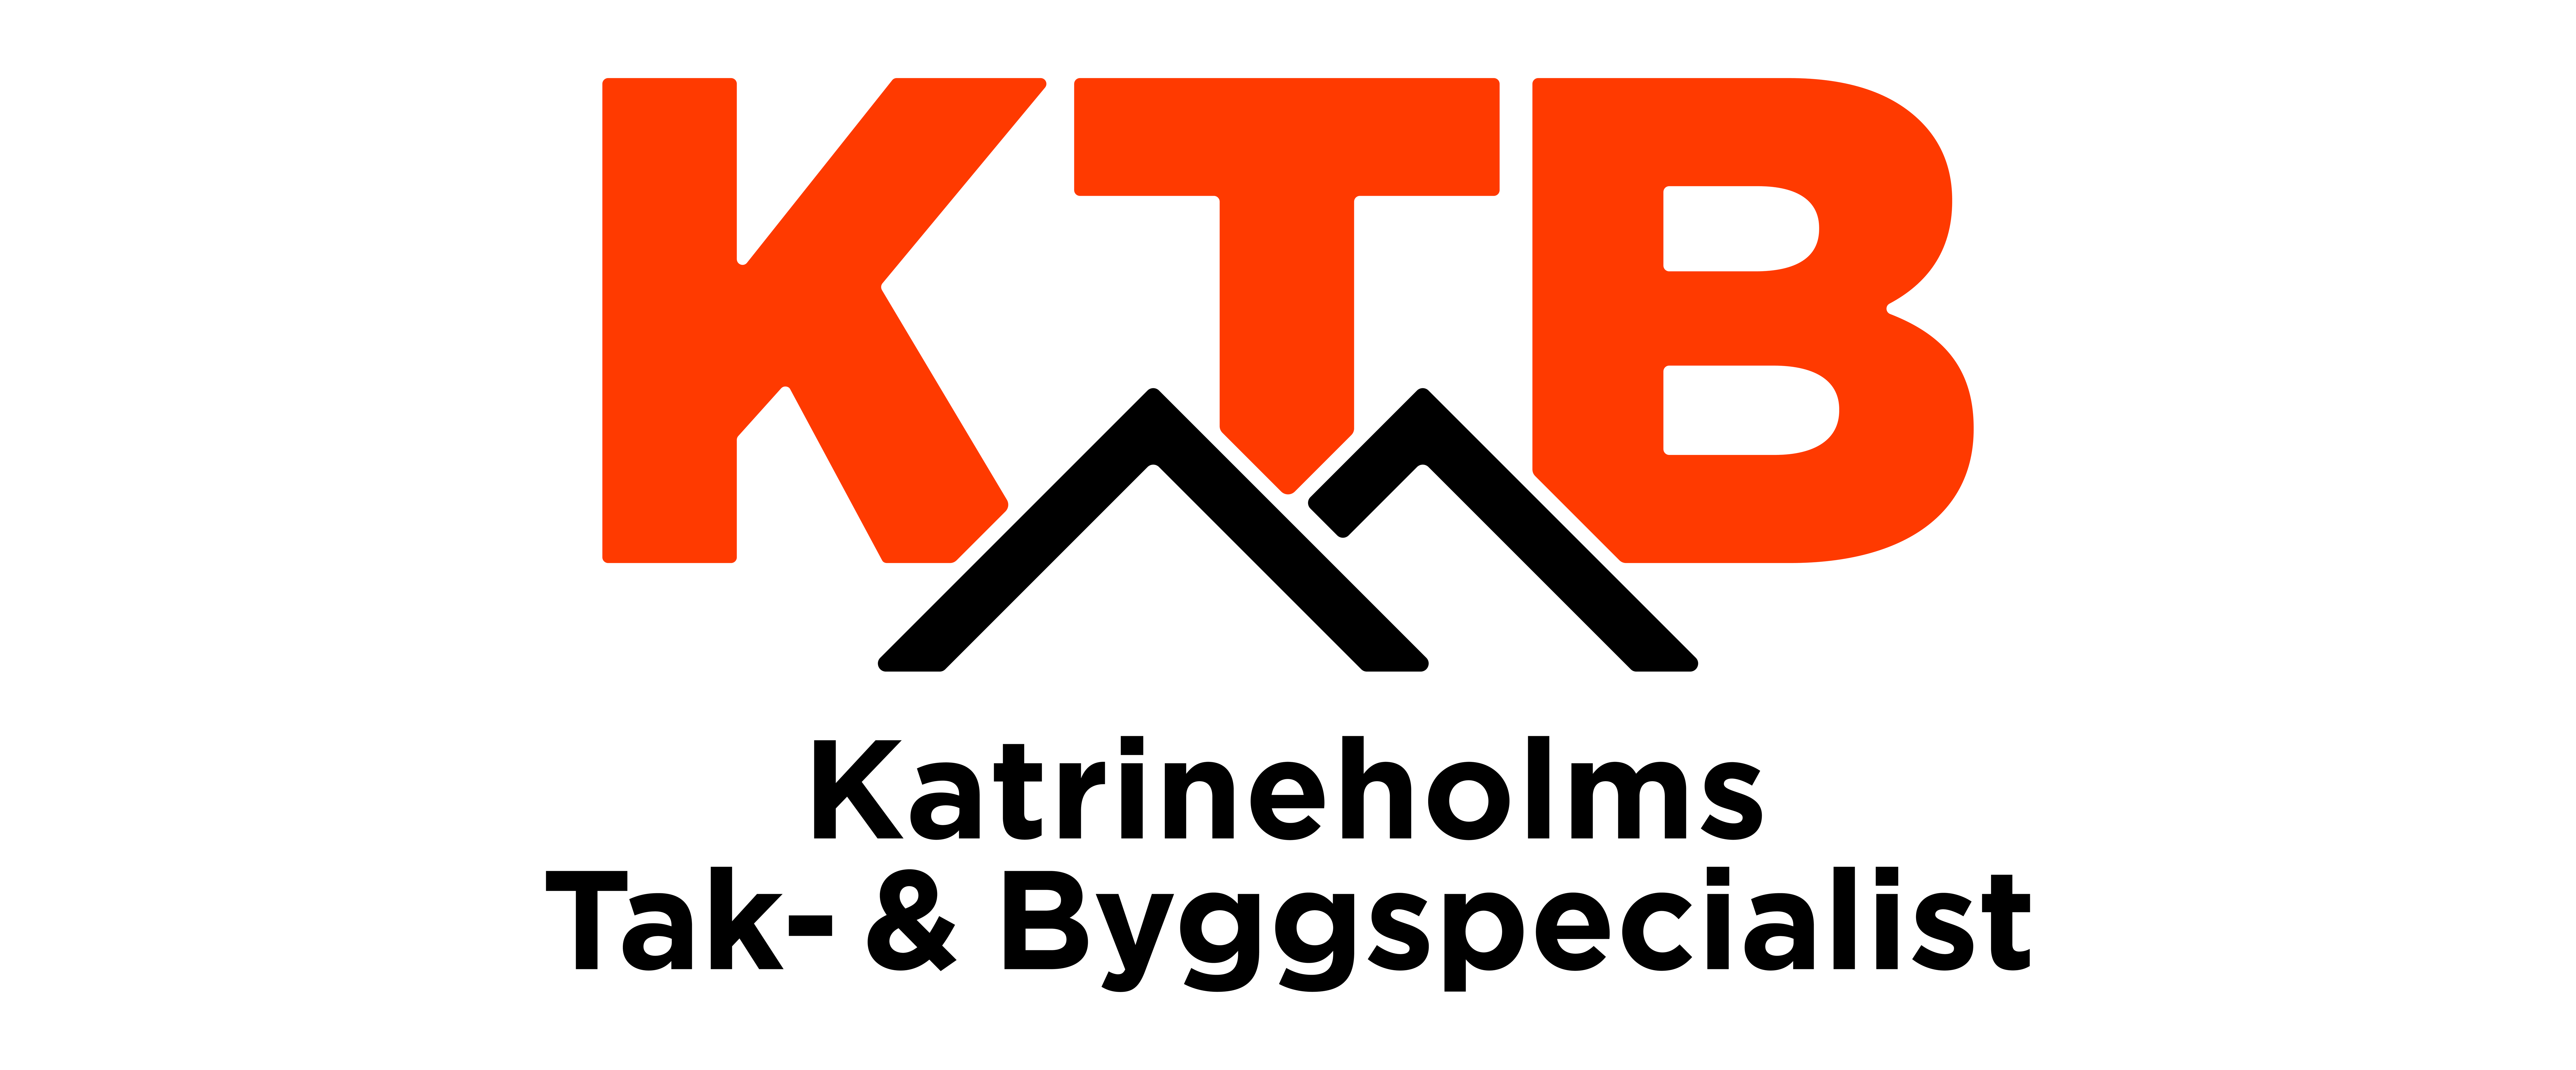 Katrineholms Tak- & Byggspecialist